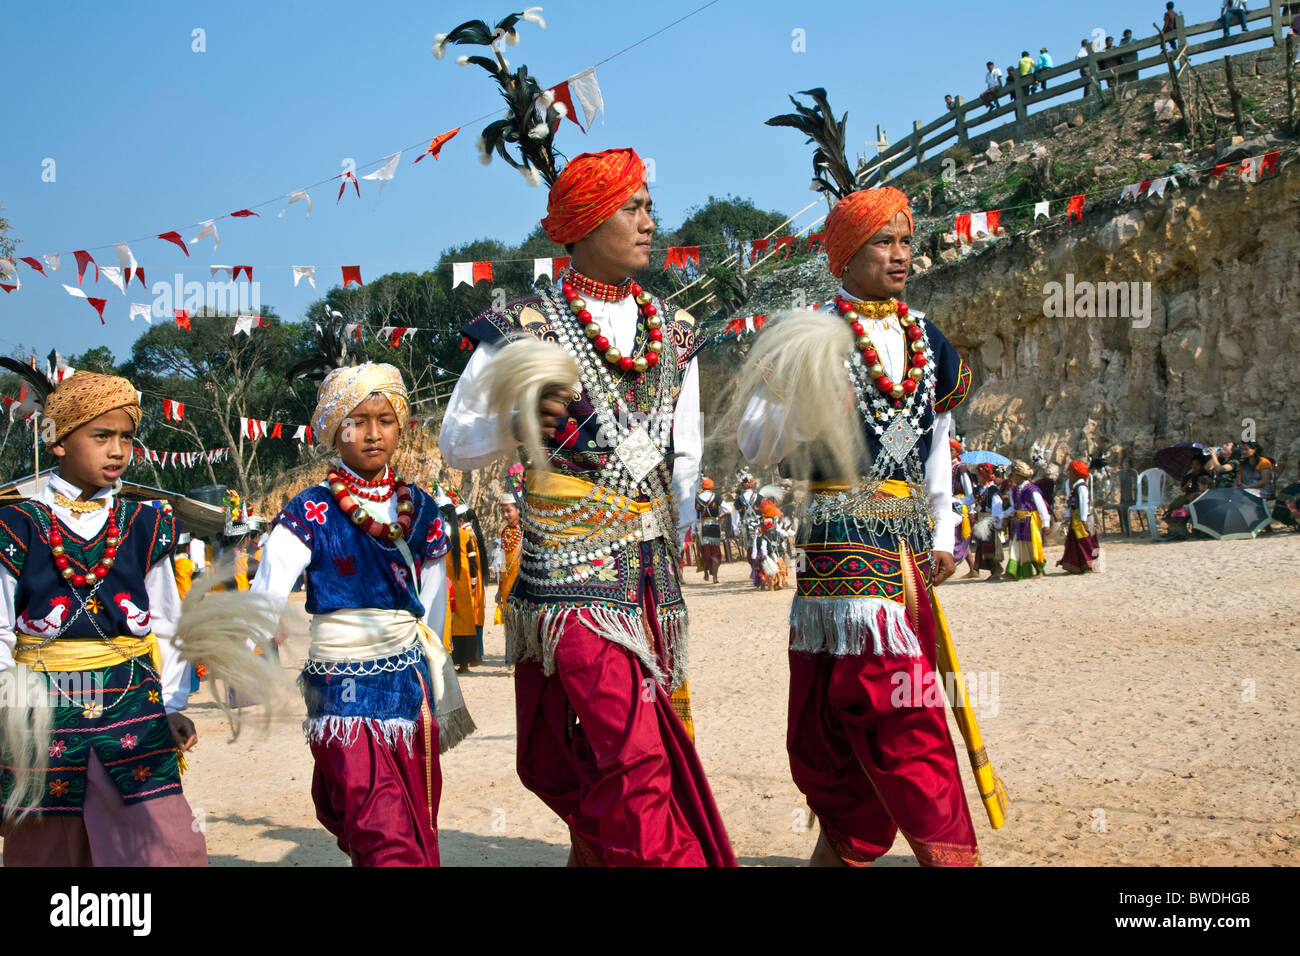 Khasi Men Dancing in Traditional Festival Dress, Cherrapunji Village, Meghalaya State, North-East India Stock Photo